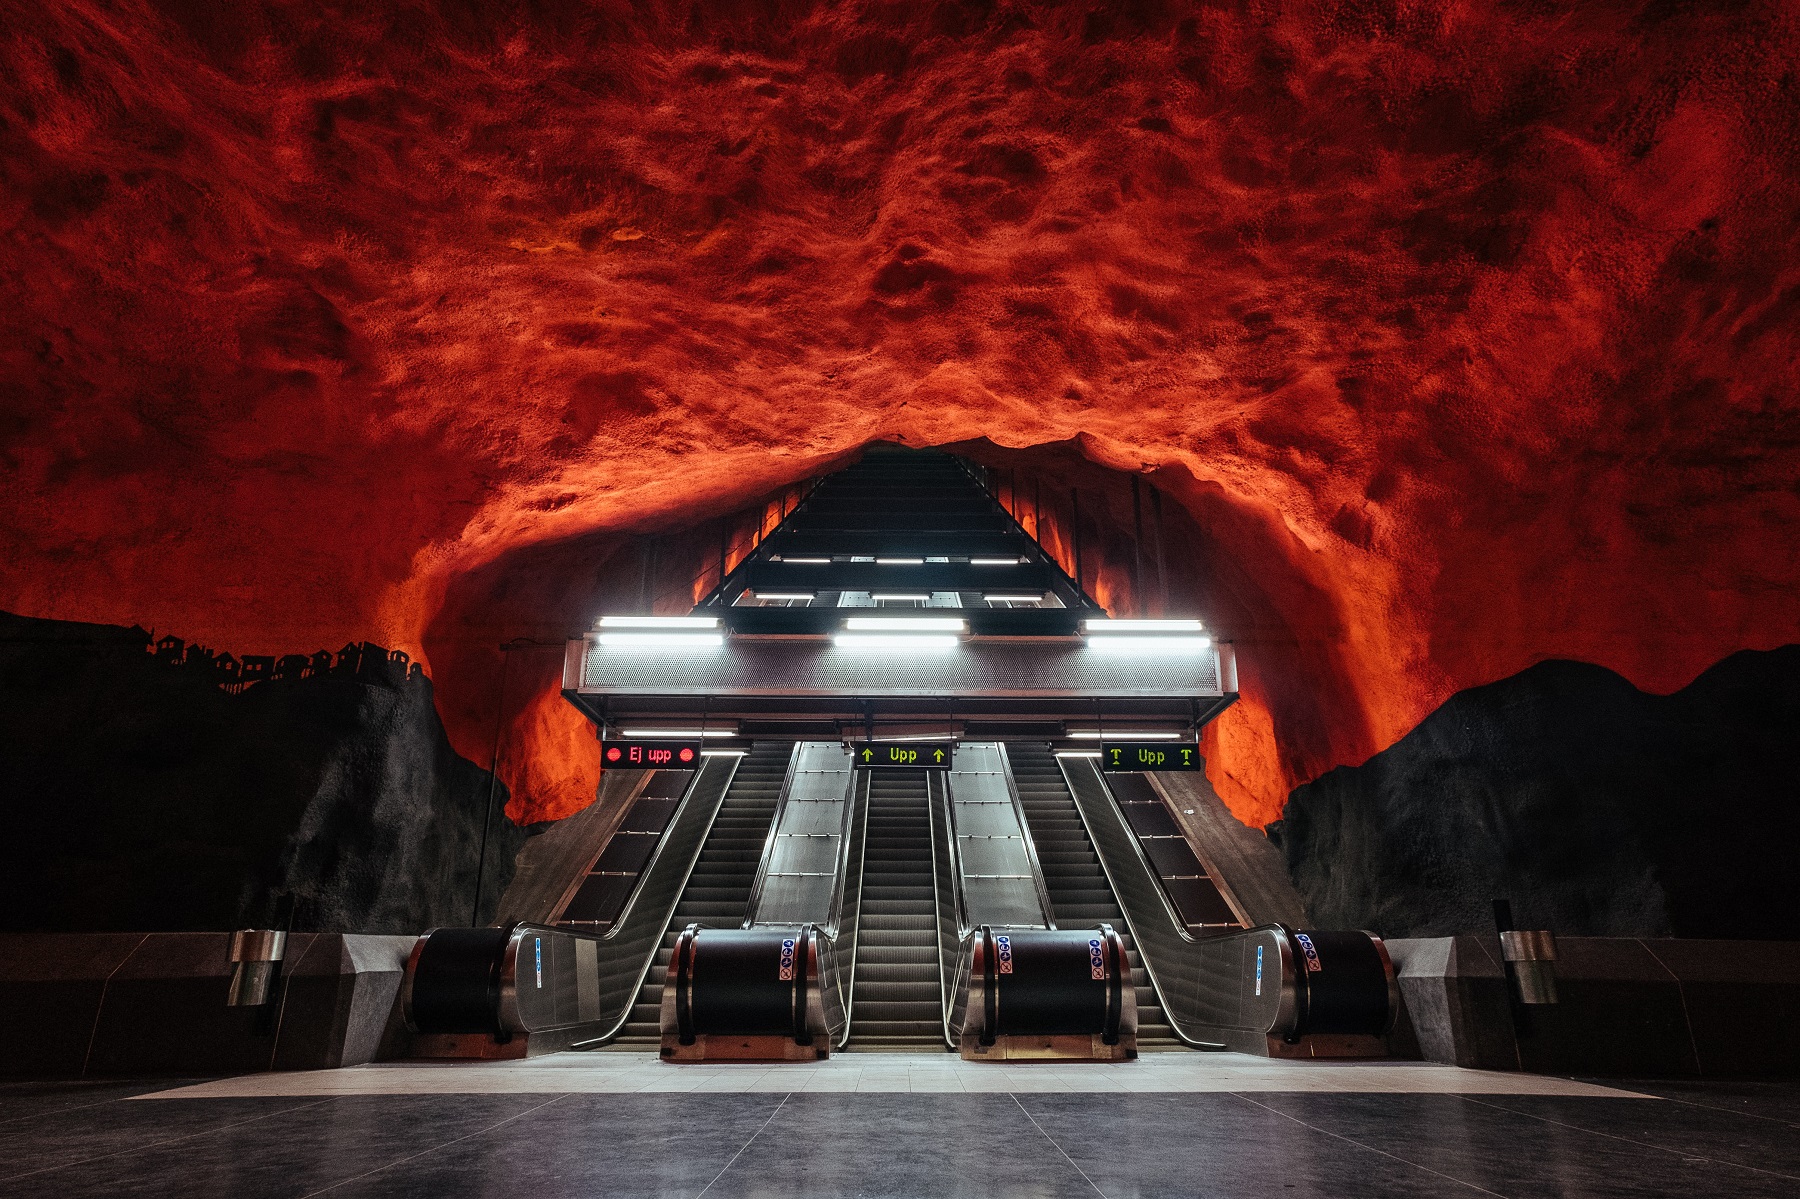 Stockholm metro